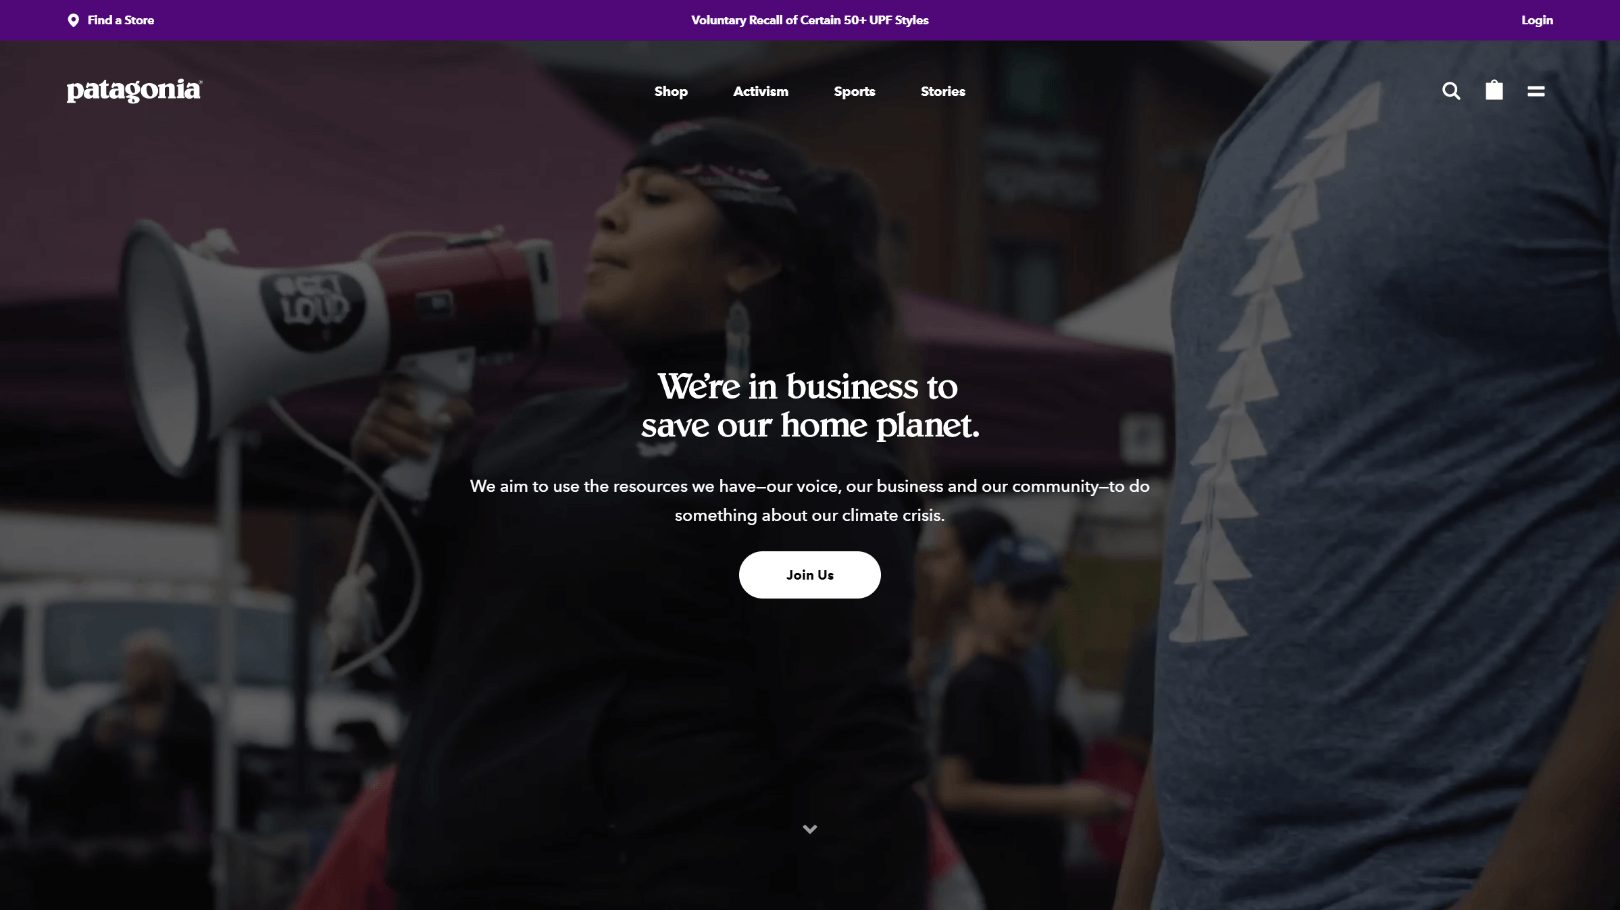 patagonia home page screenshot